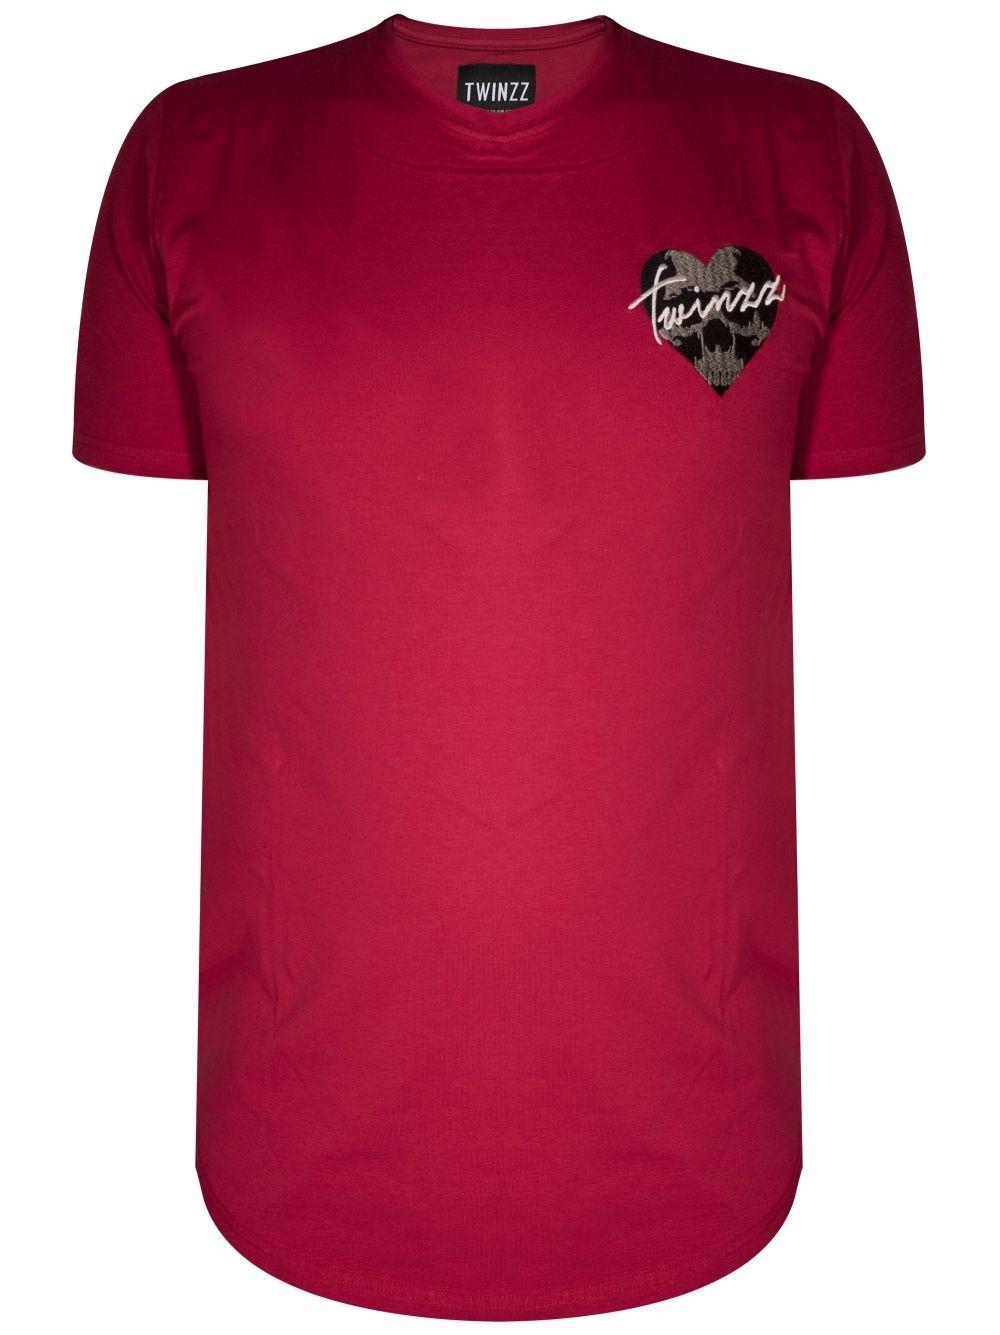 Red Heart Logo - Twinzz Red Heart Logo T-Shirt - Designerwear